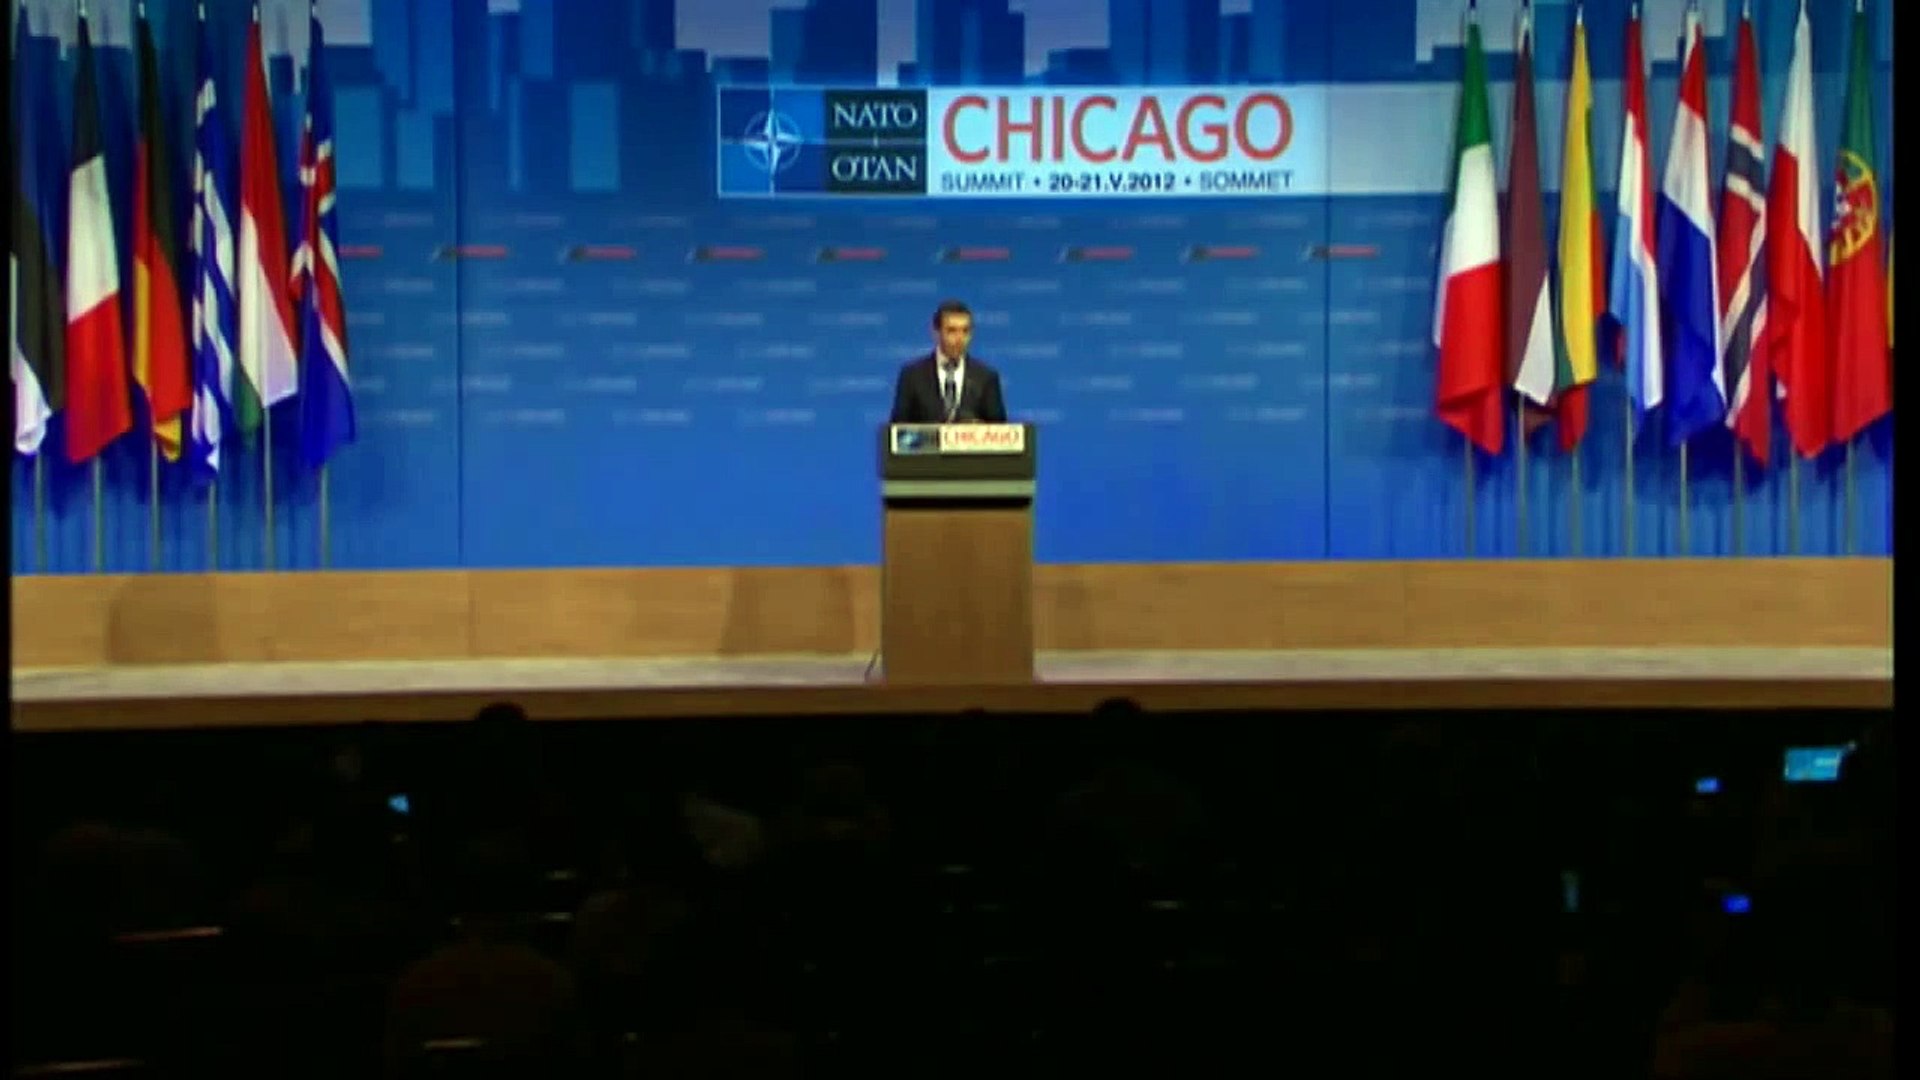 ⁣NATO Summit Chicago : Final press conference by the NATO Secretary General